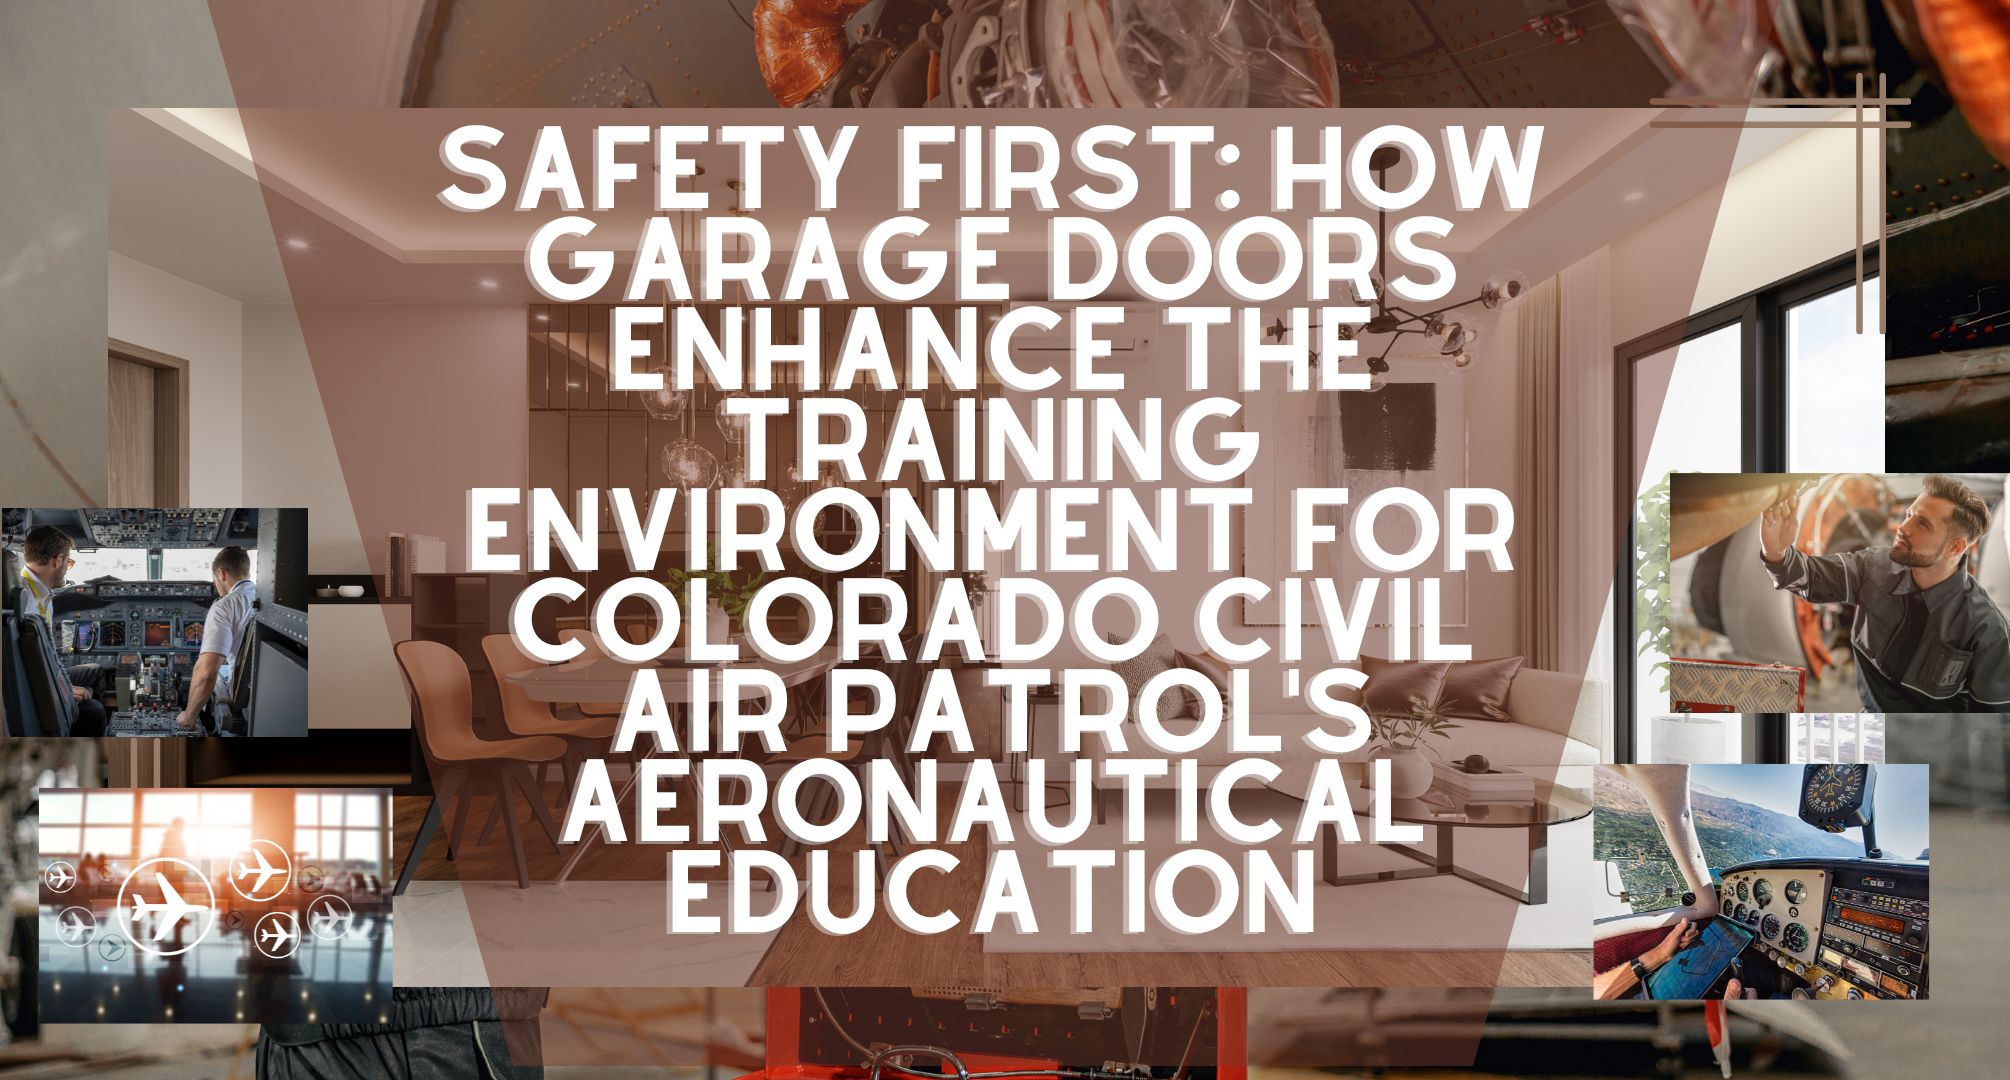 Safety First: How Garage Doors Enhance the Training Environment for Colorado Civil Air Patrol's Aeronautical Education